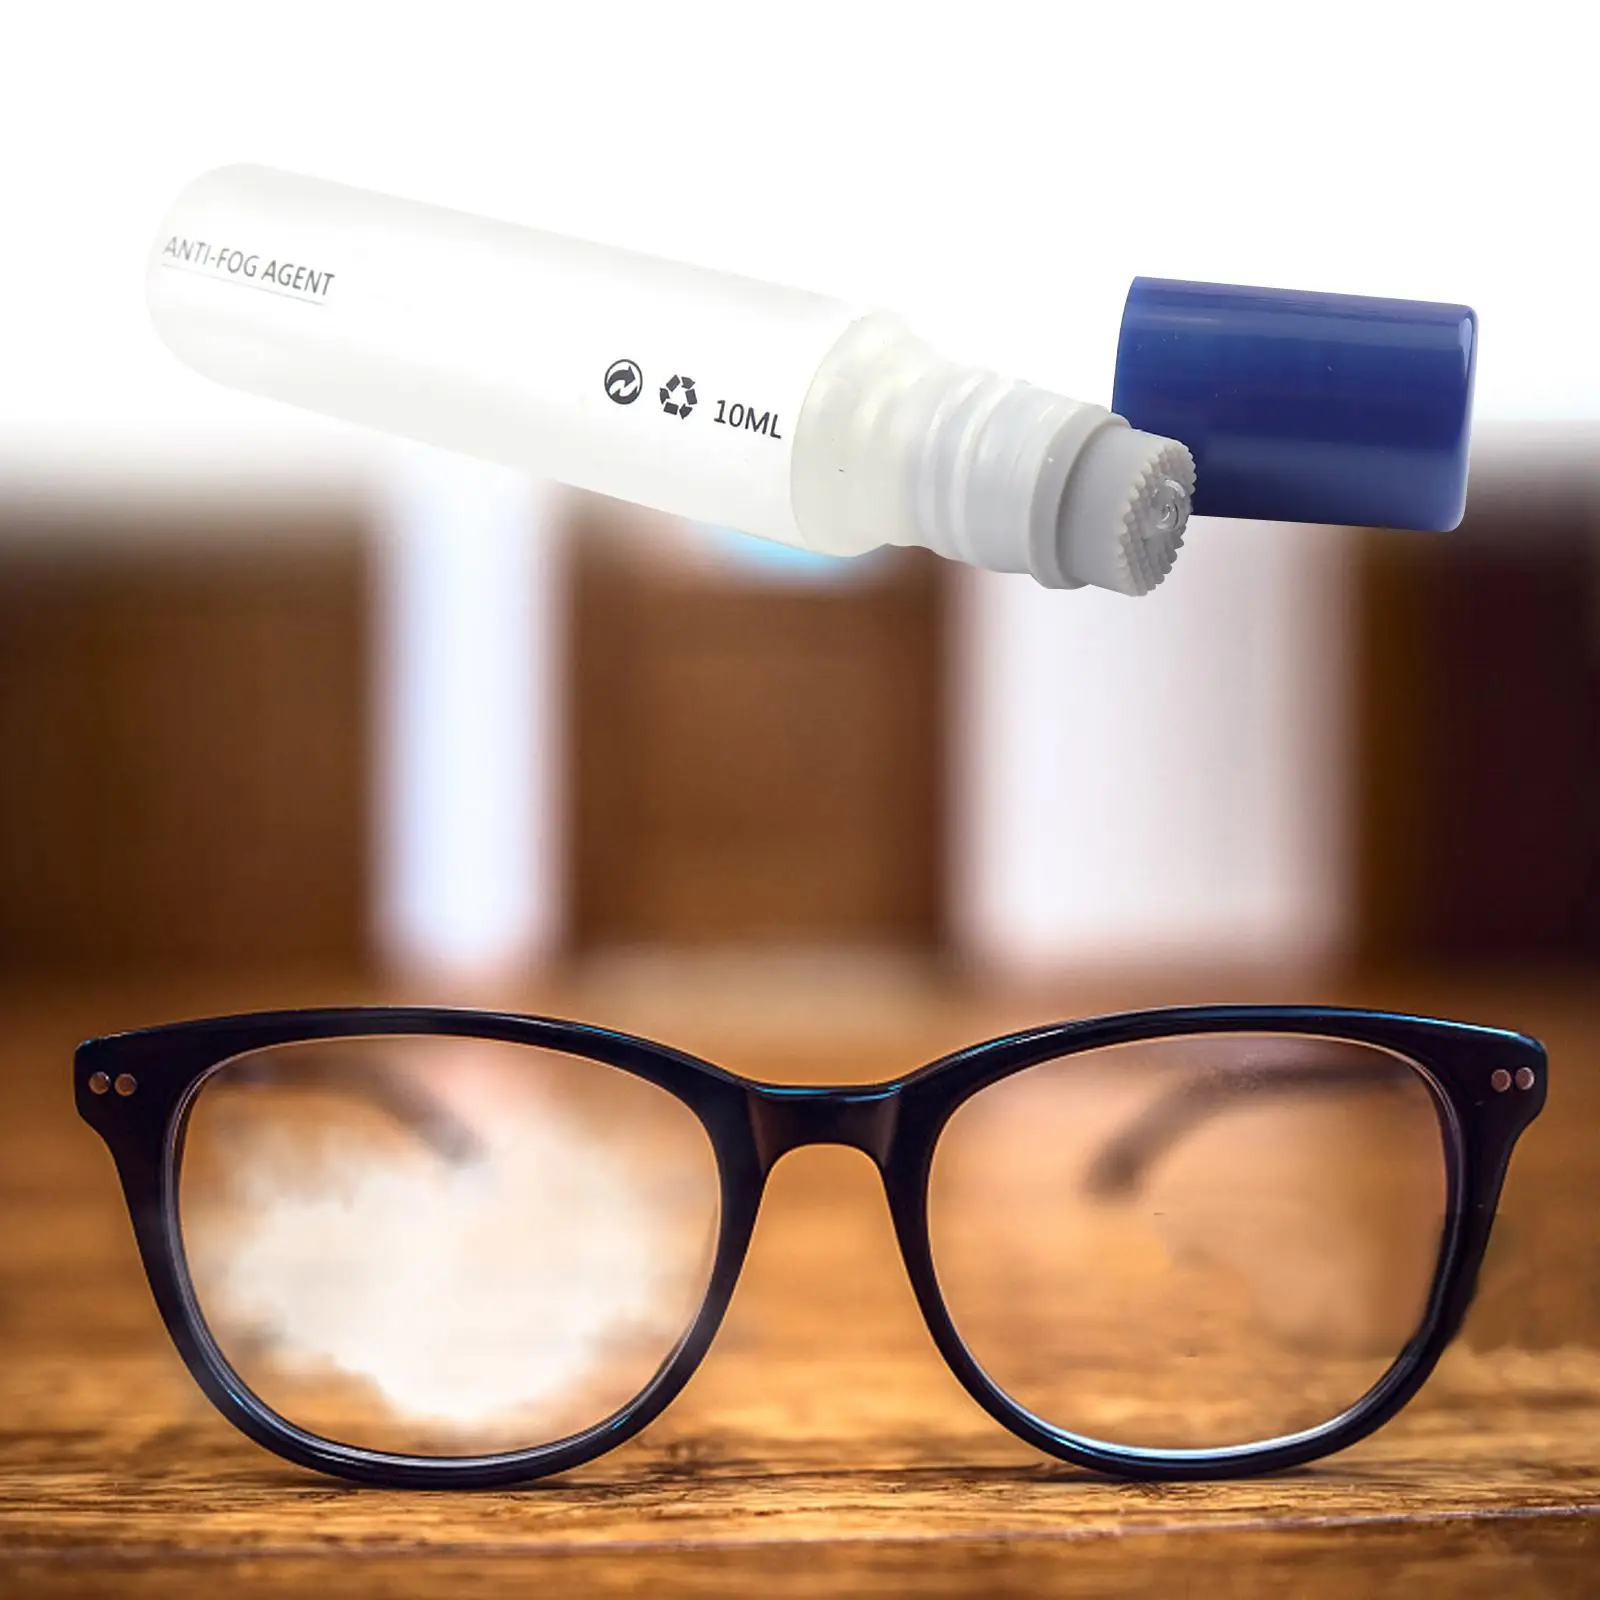 Anti Fog Spray Coating Spray Cars Glass Cleaner Spray Lens Cleaning Spray for Windshield Headset Glasses Watch Screen Eyewear